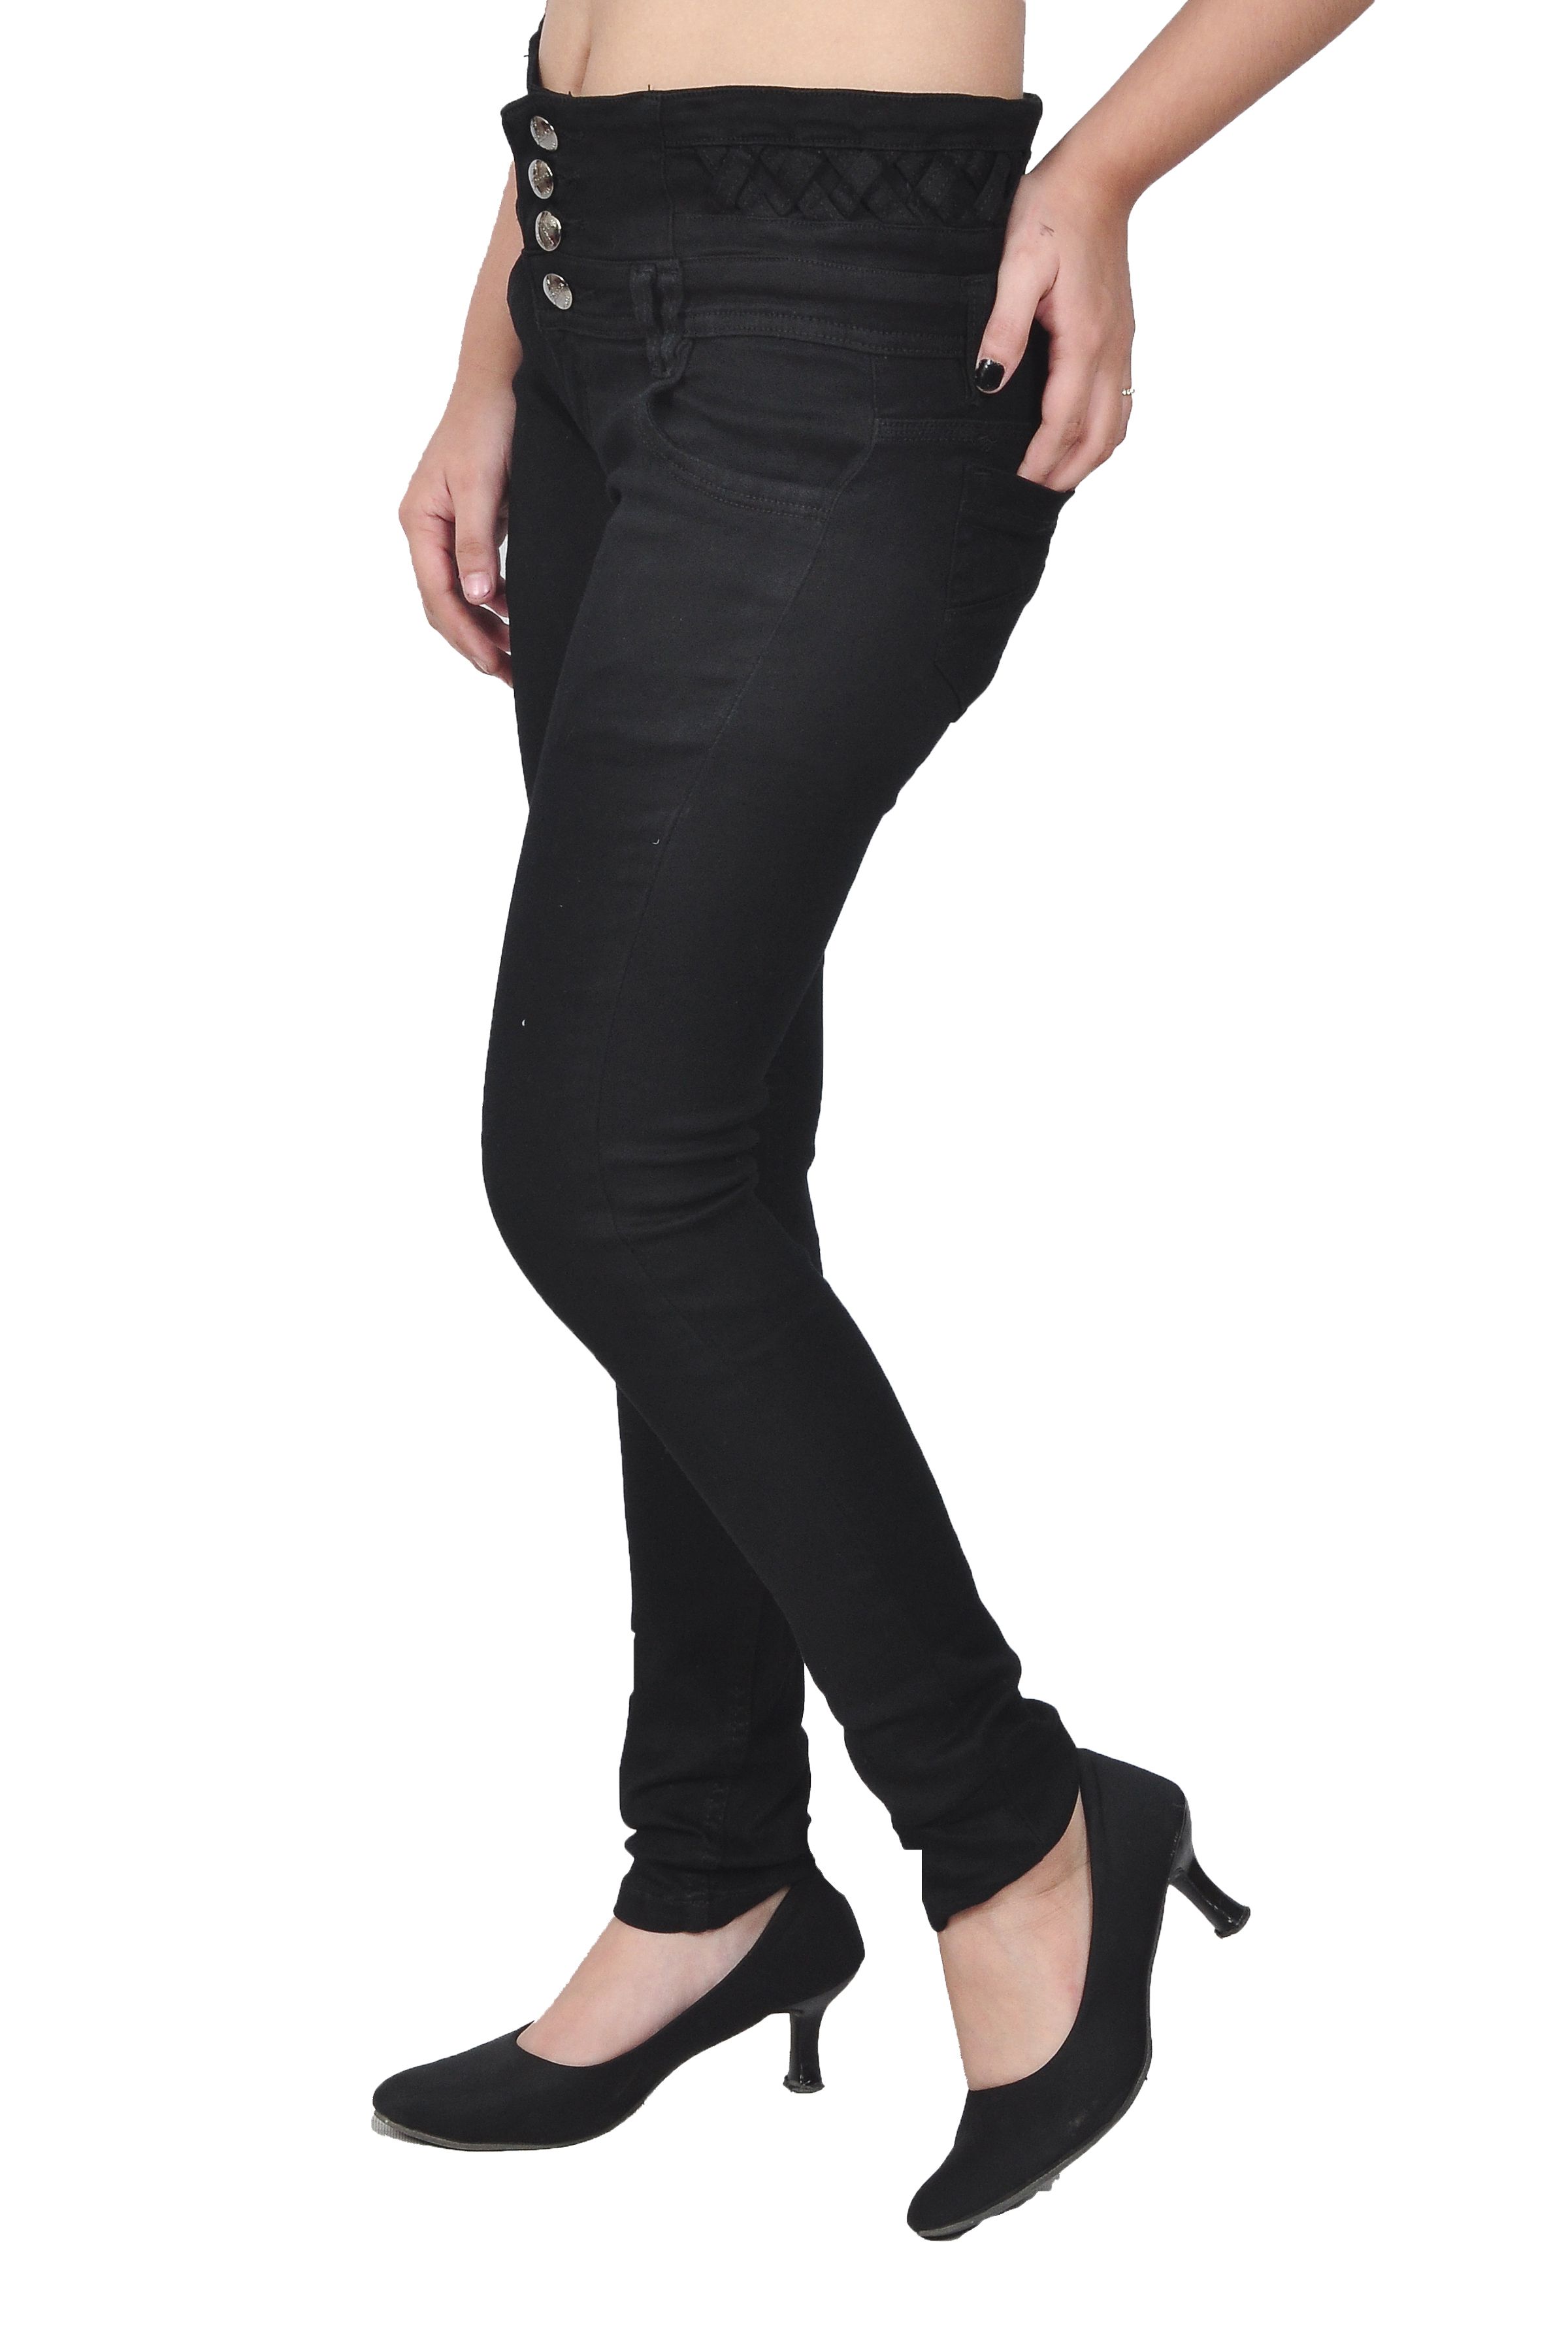 Nifty Black Denim Jeans - Buy Nifty Black Denim Jeans Online at Best ...